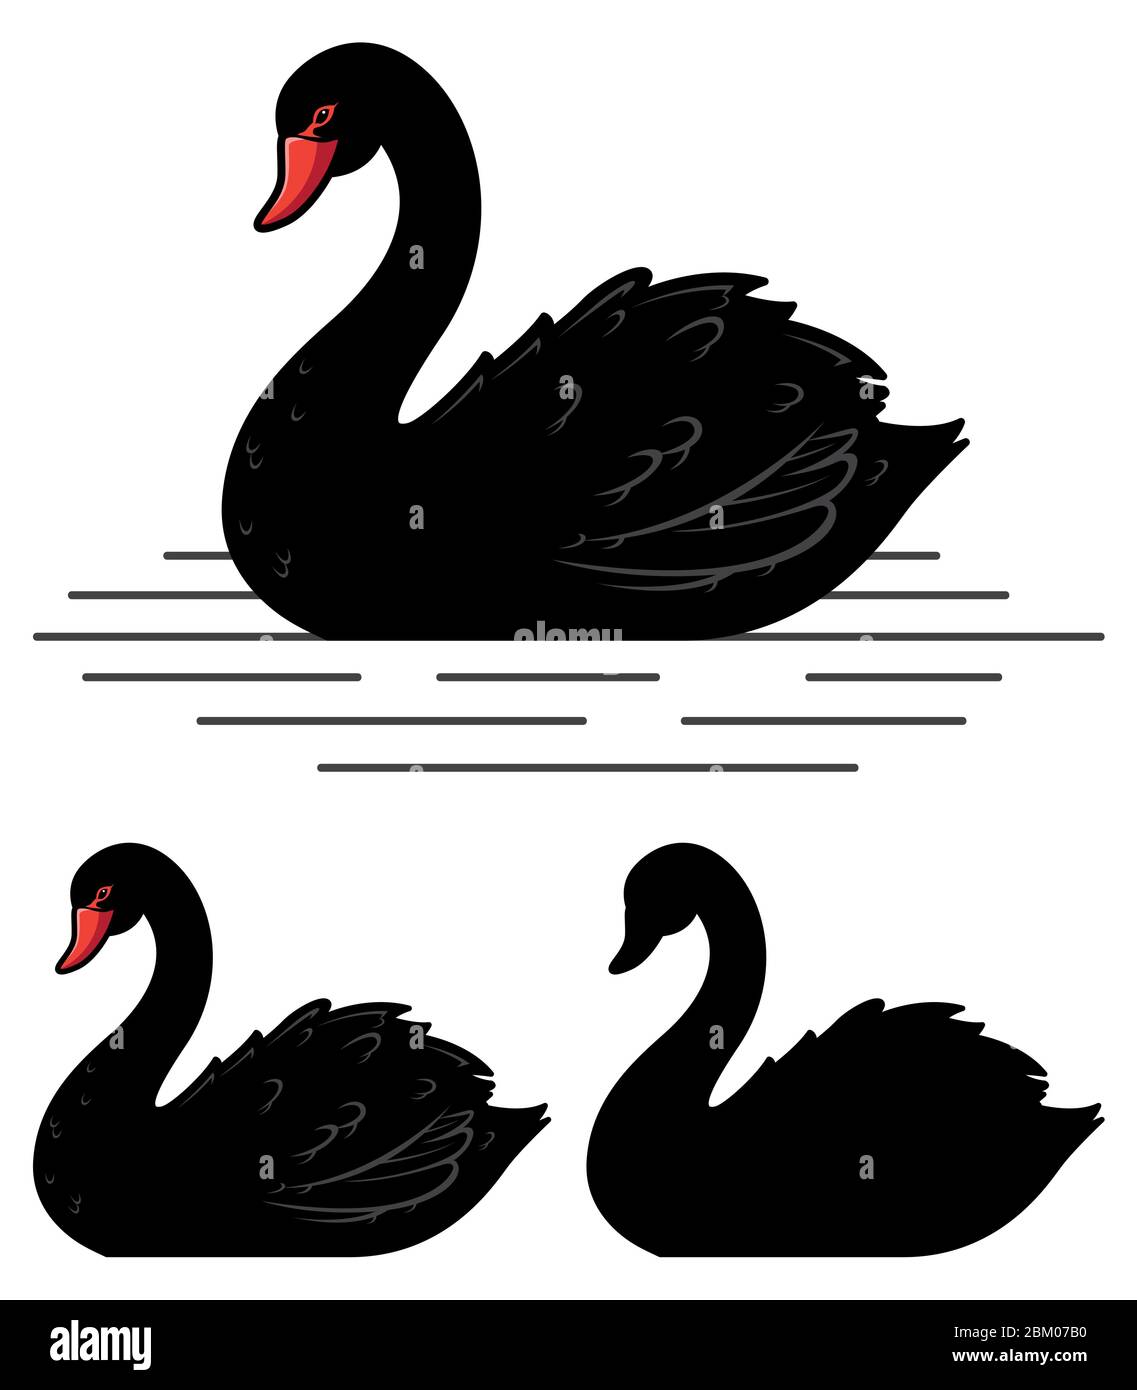 Swan symbol Stock Vector Images - Alamy